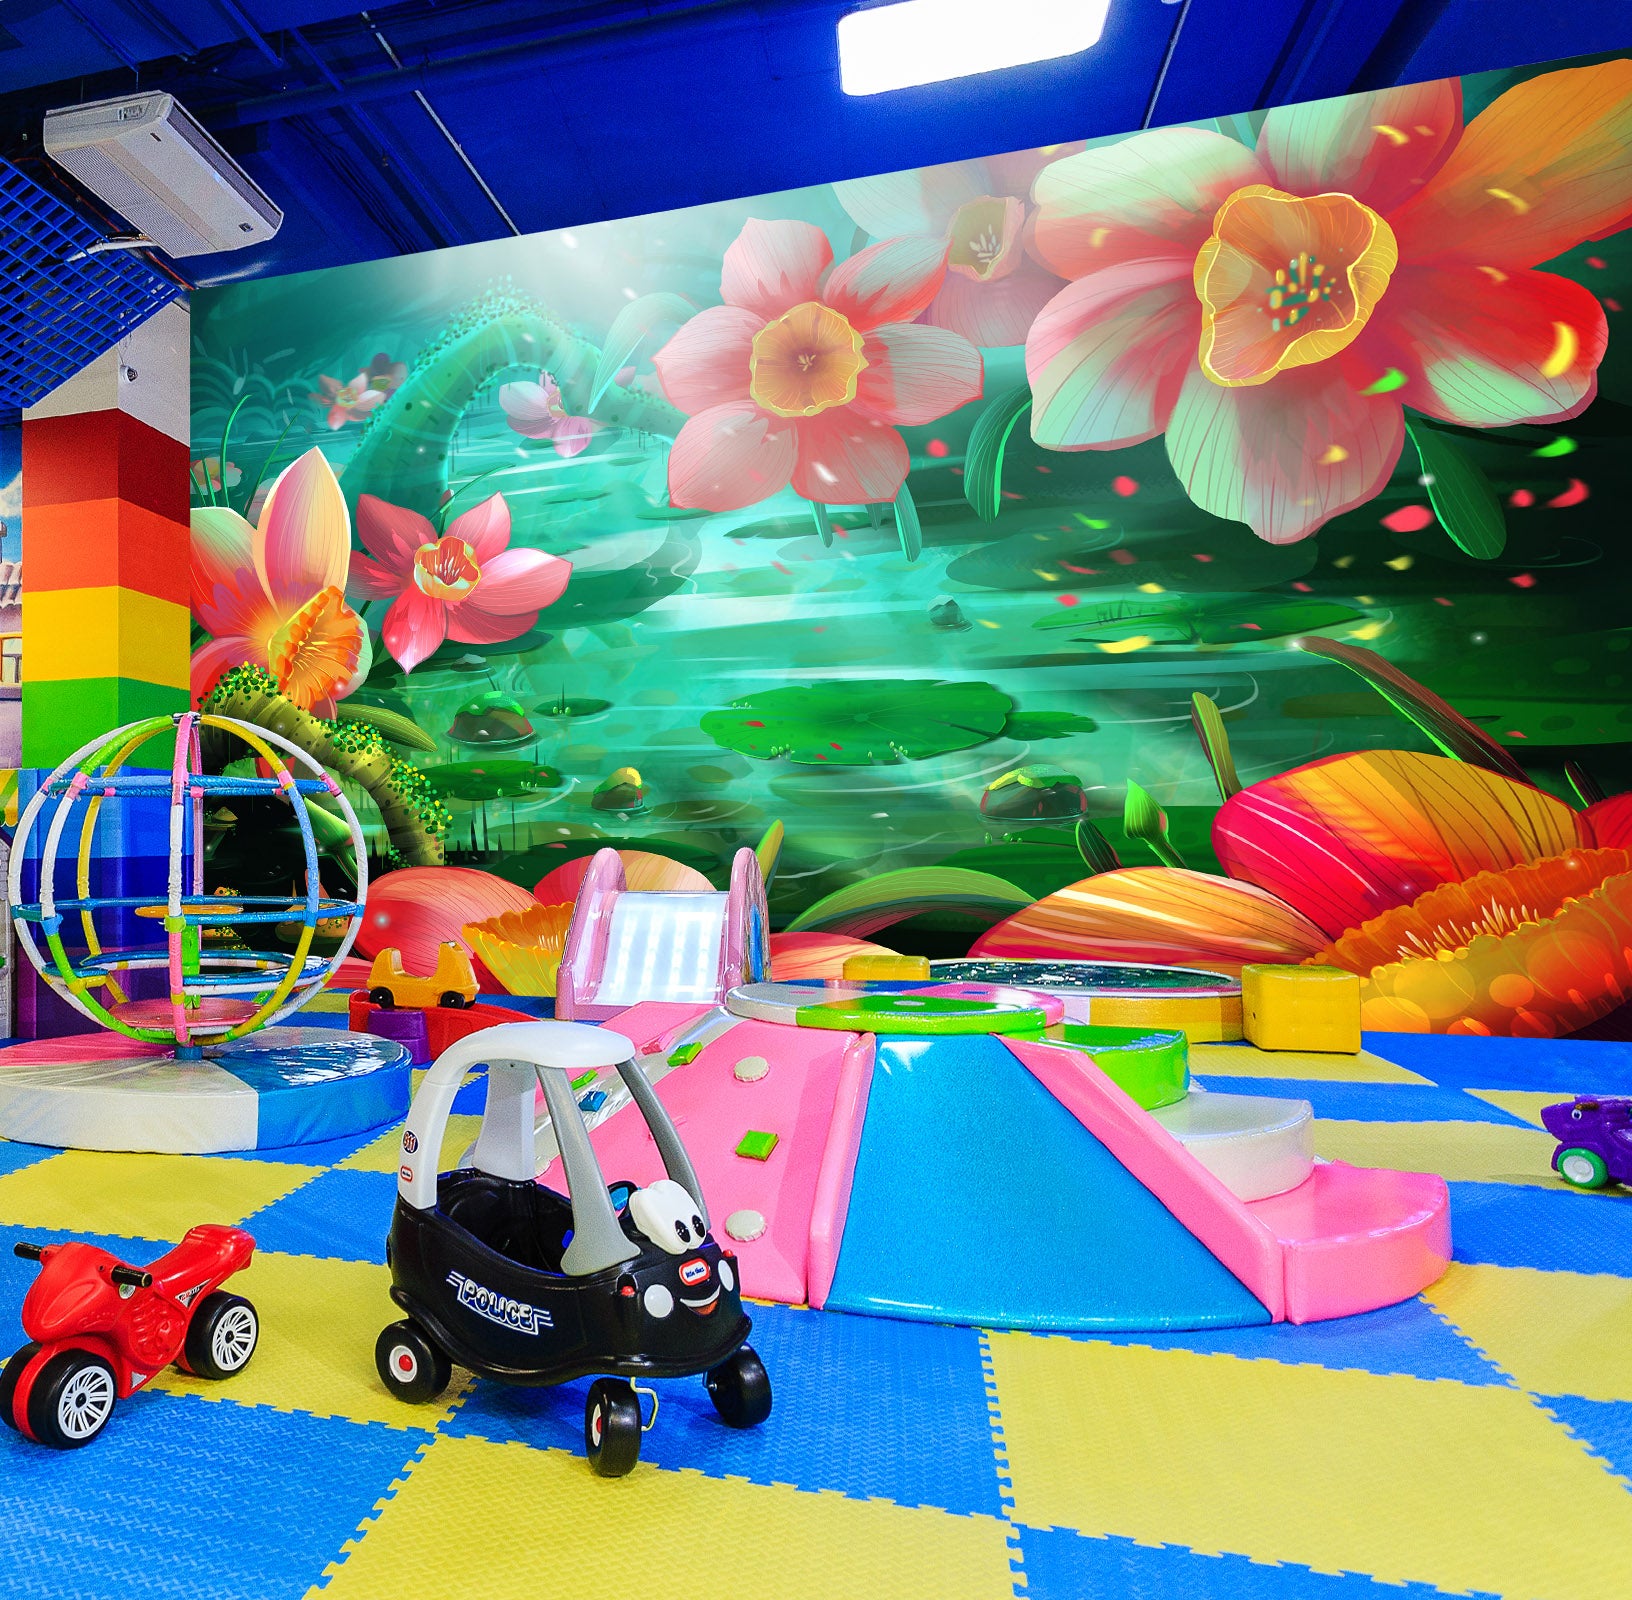 3D Flowers 1405 Indoor Play Centres Wall Murals